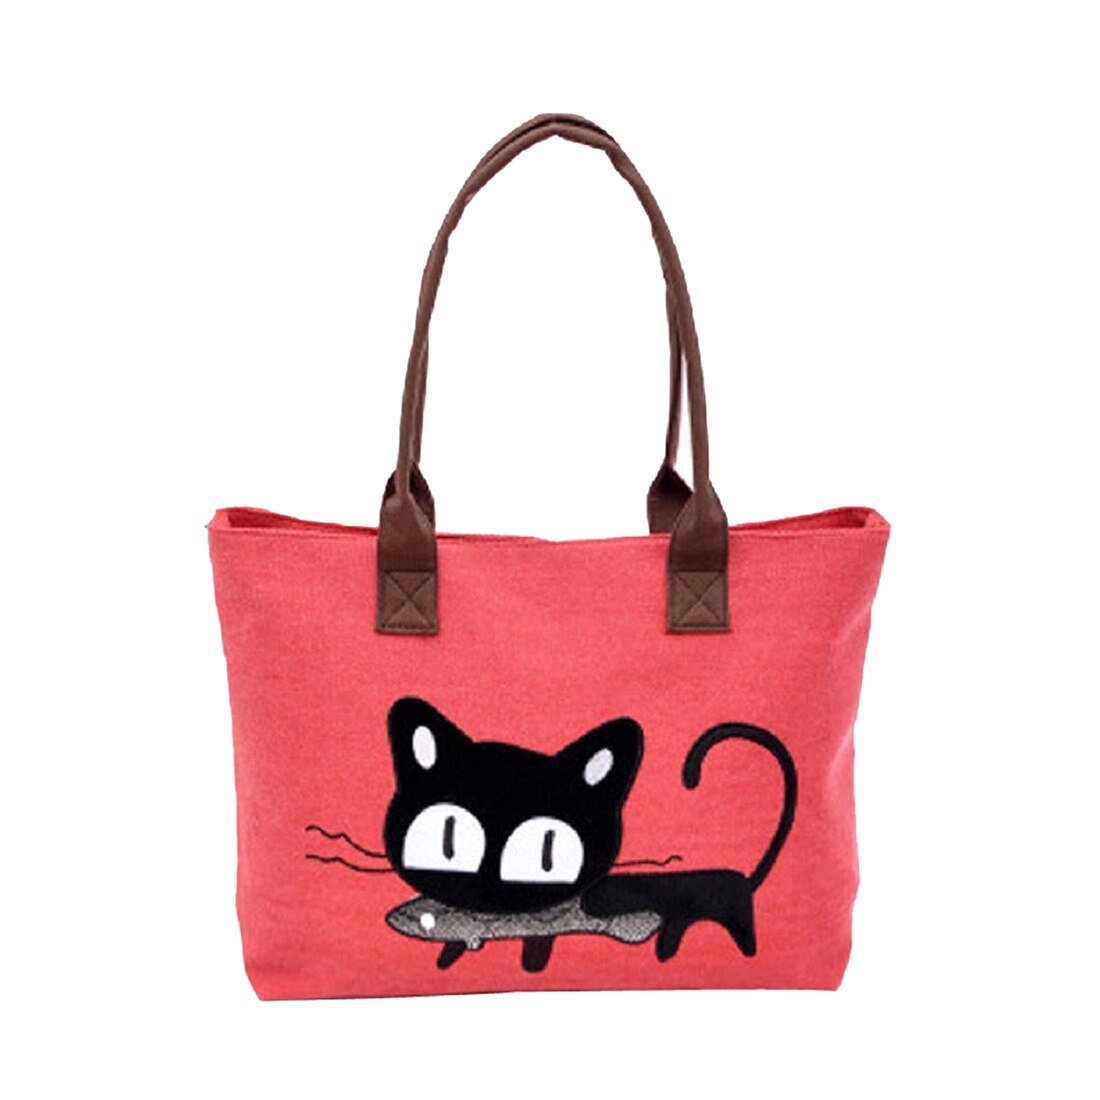 New Fashion Woman Shoulder Bag Canvas Cute Cat Bag Office Bag Lunch Bag (Black) - ebowsos